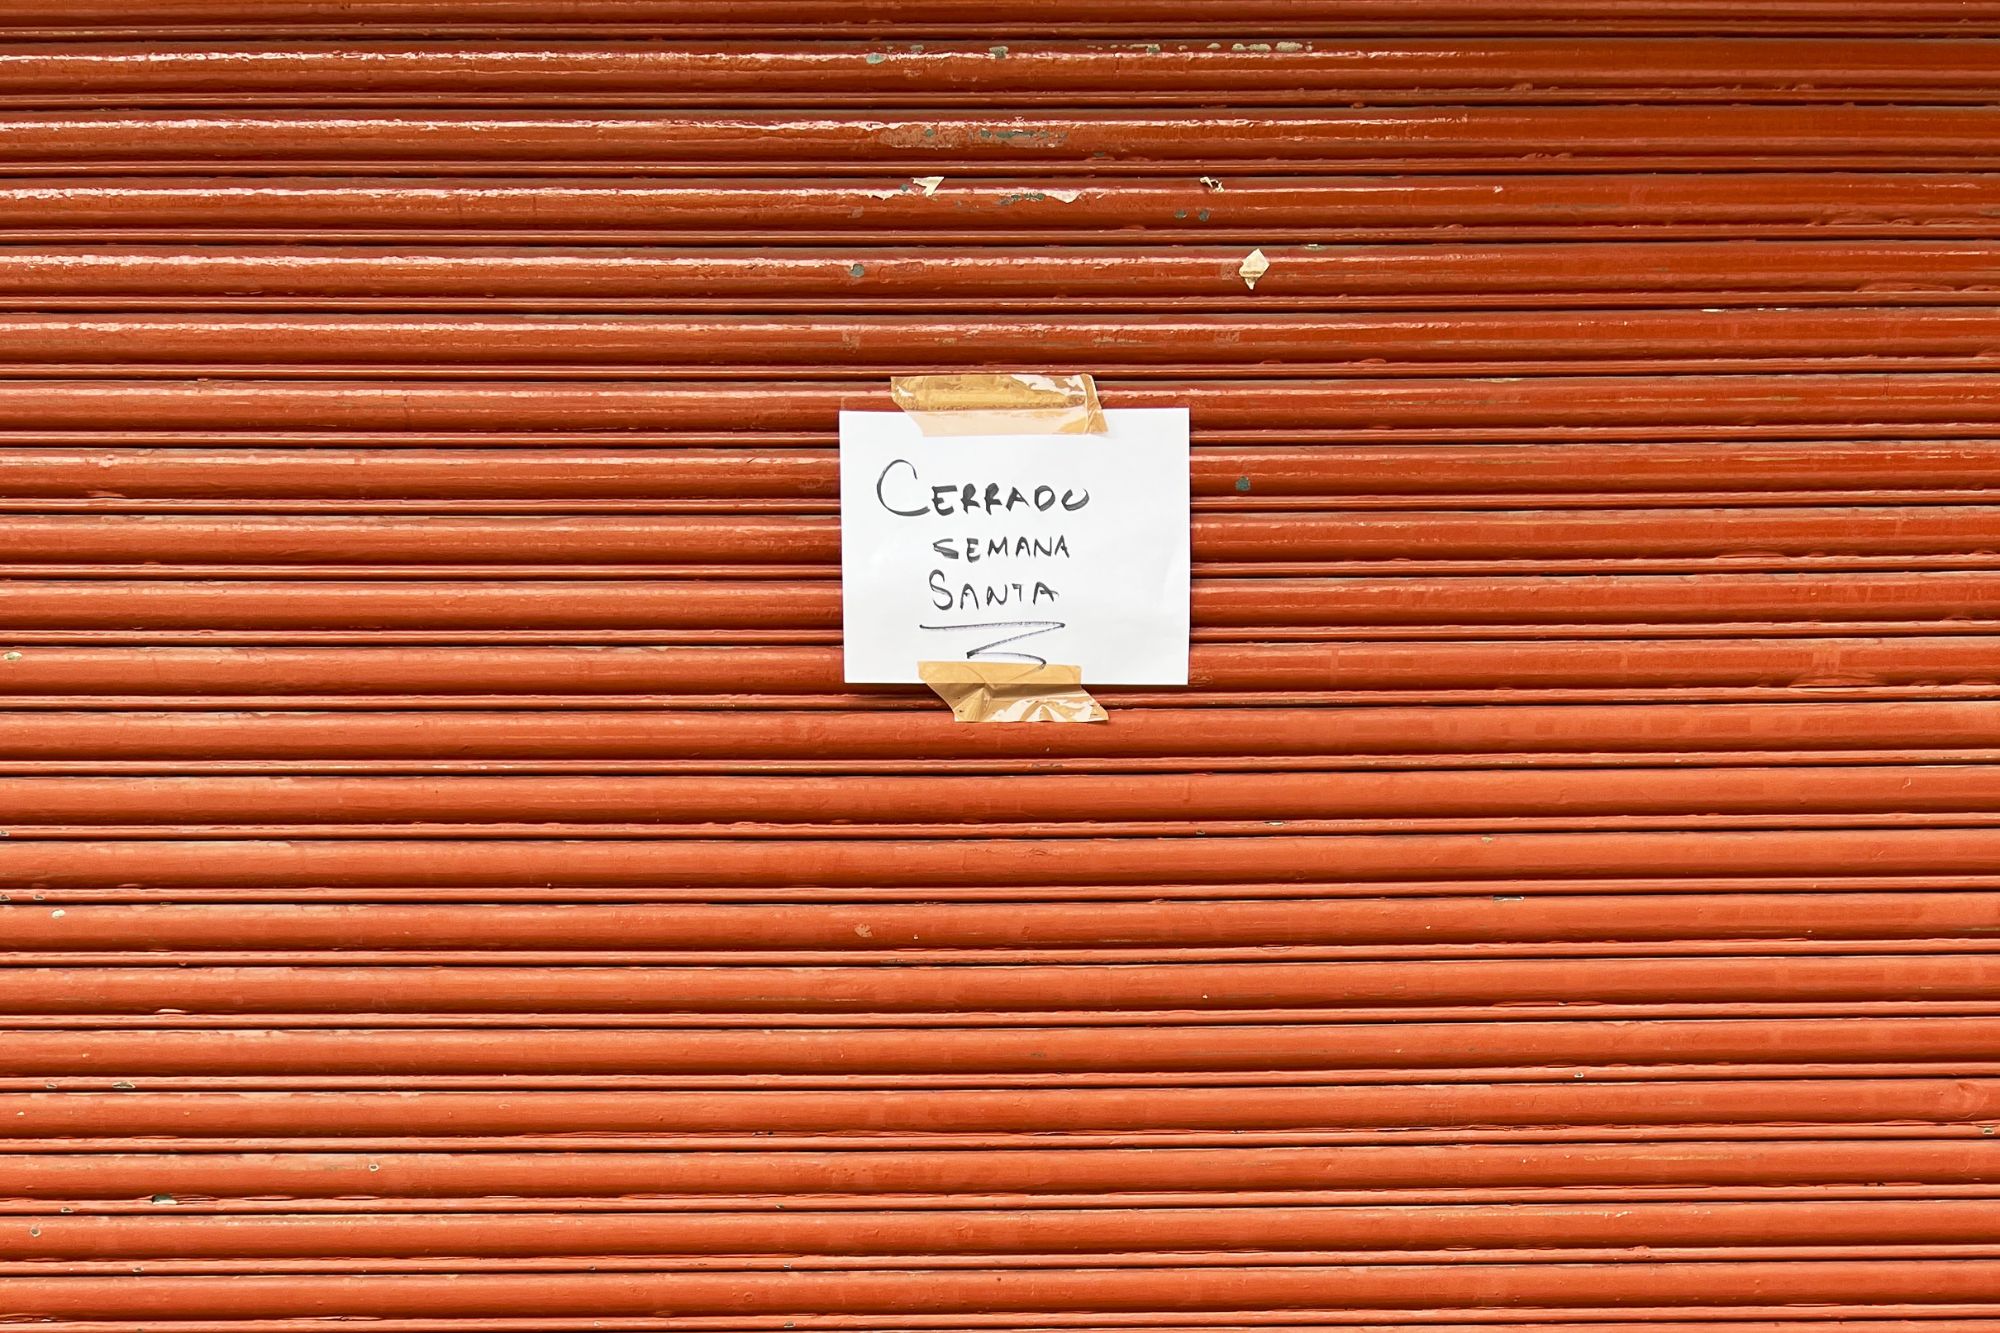 Paper sign that reads "Cerrado Semana Santa"